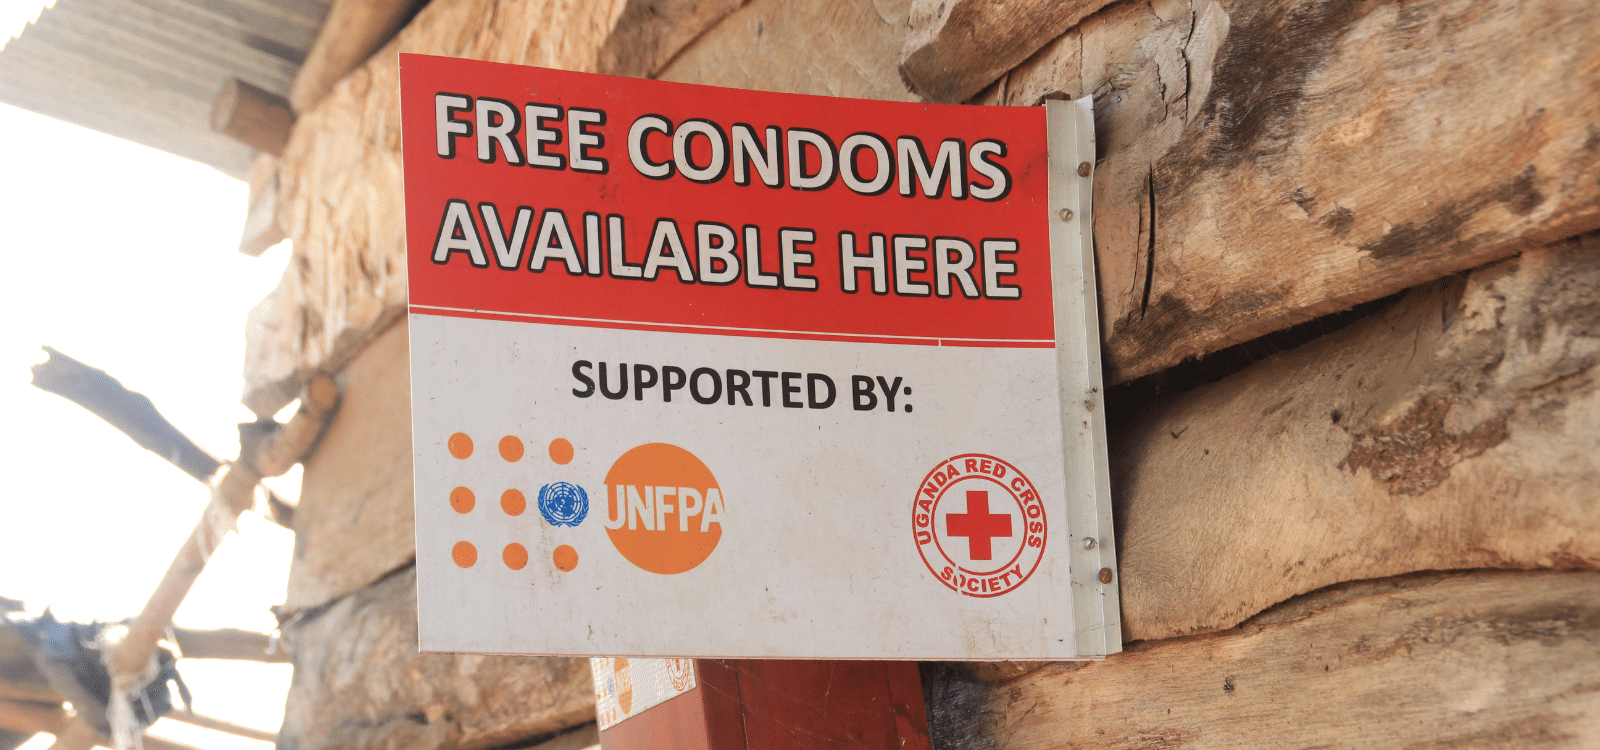 Sign advertising free condoms